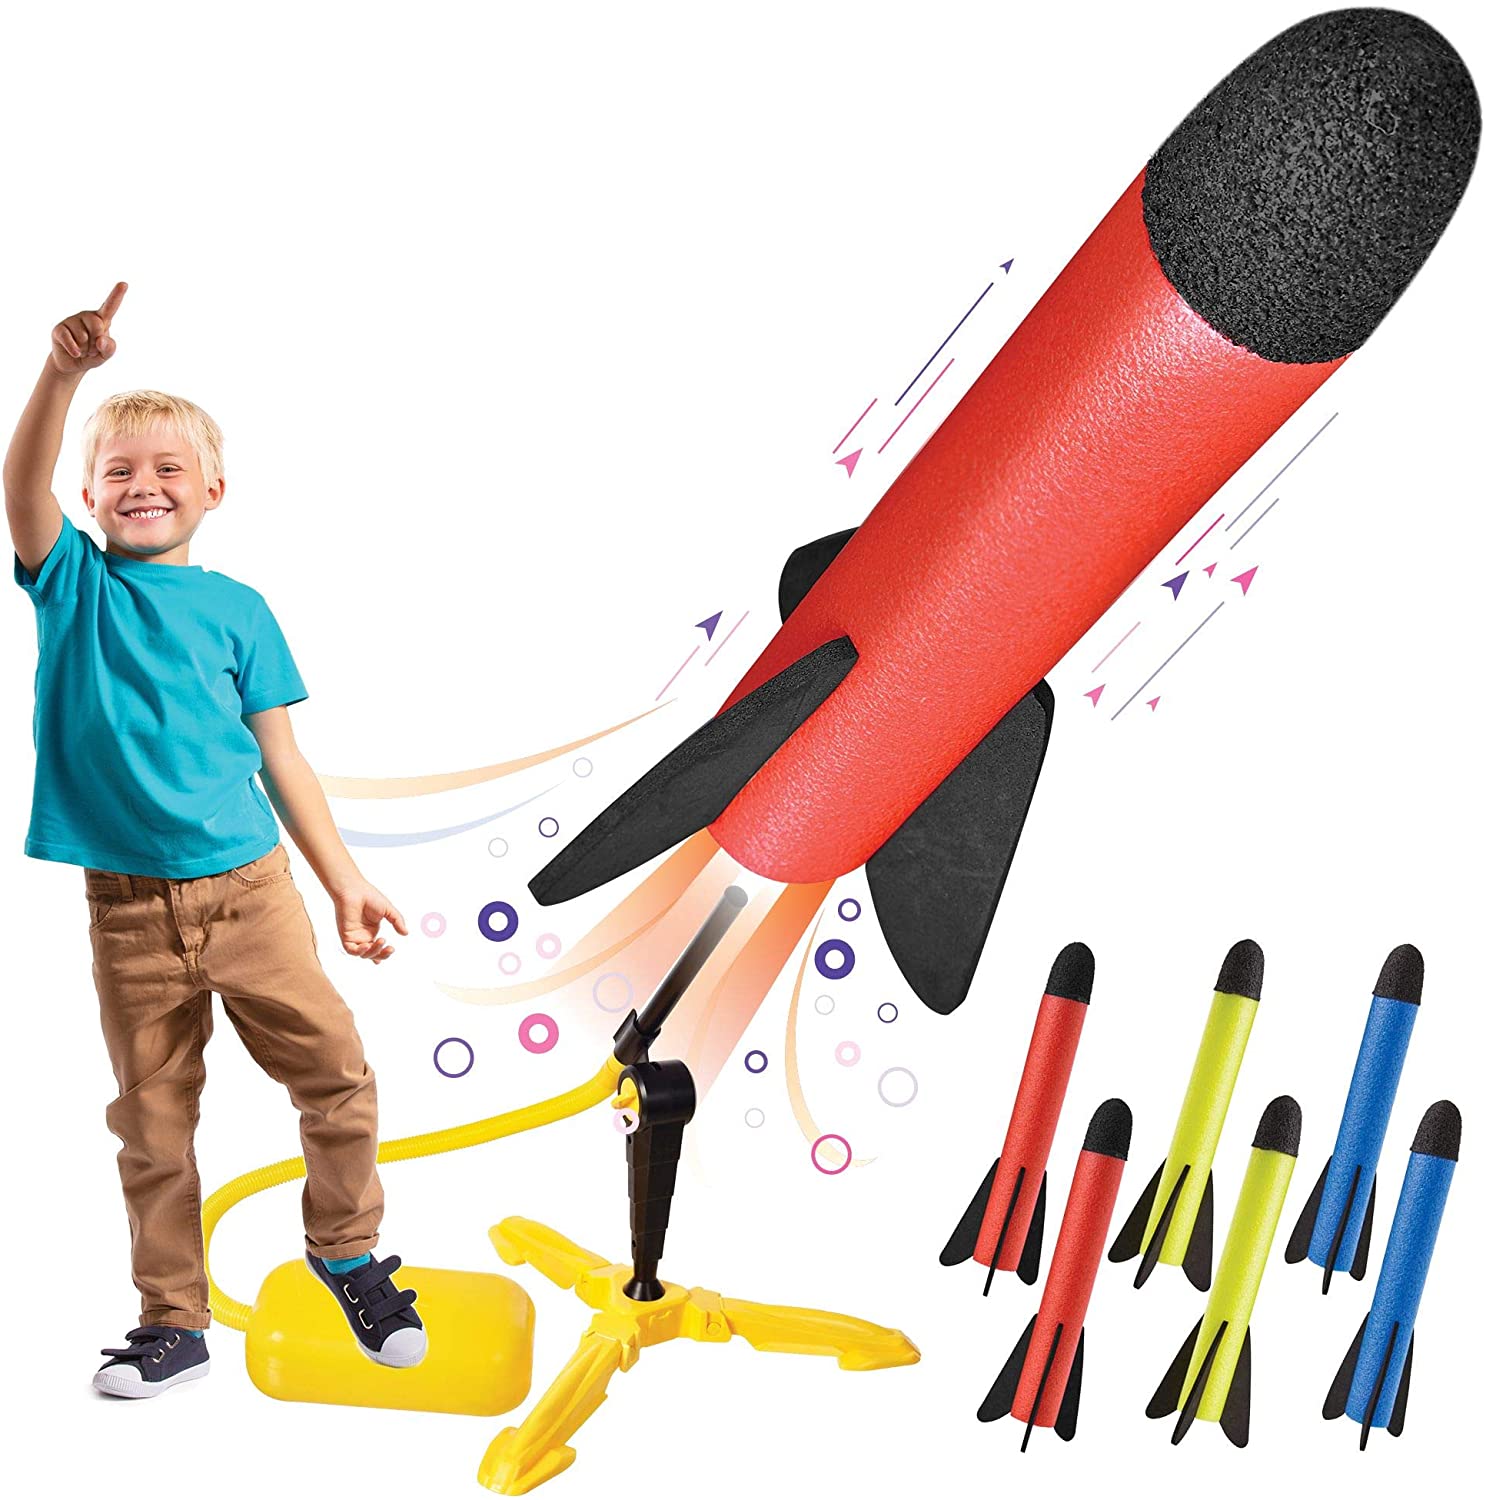 Motoworx Backyard Rocket Launcher Gift For 3-Year-Old Boys